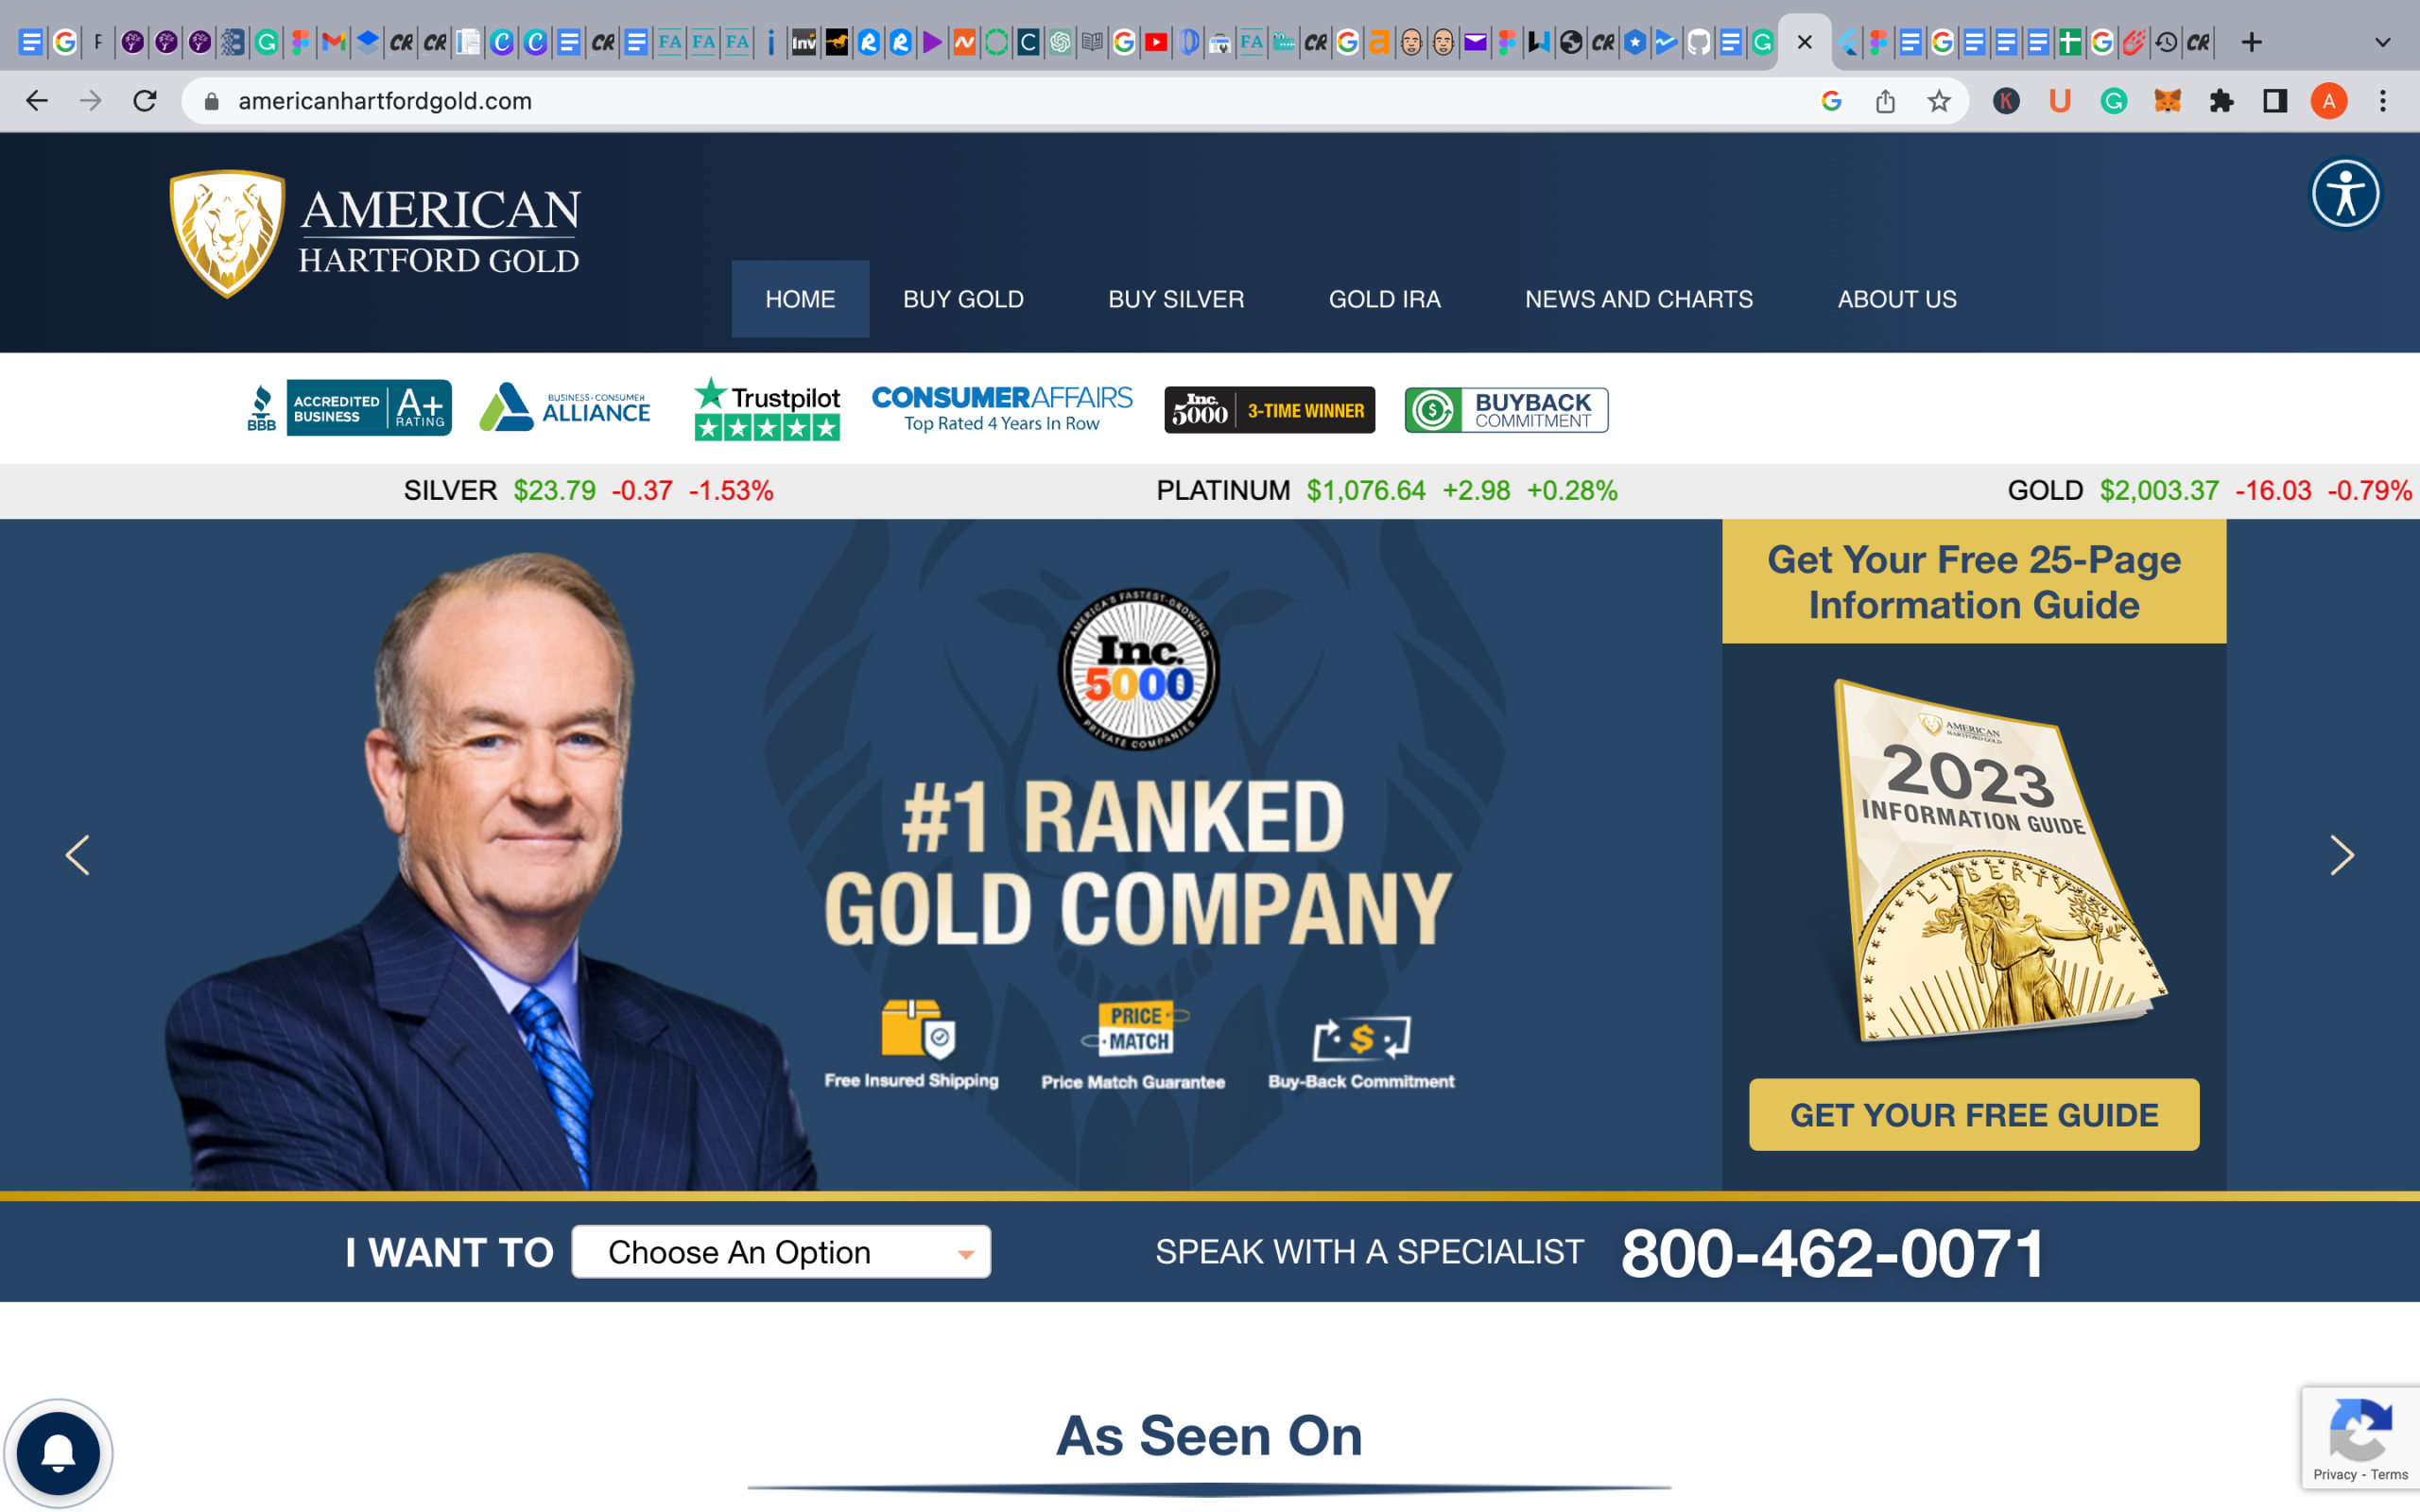 american hartford gold official website homepage screenshot